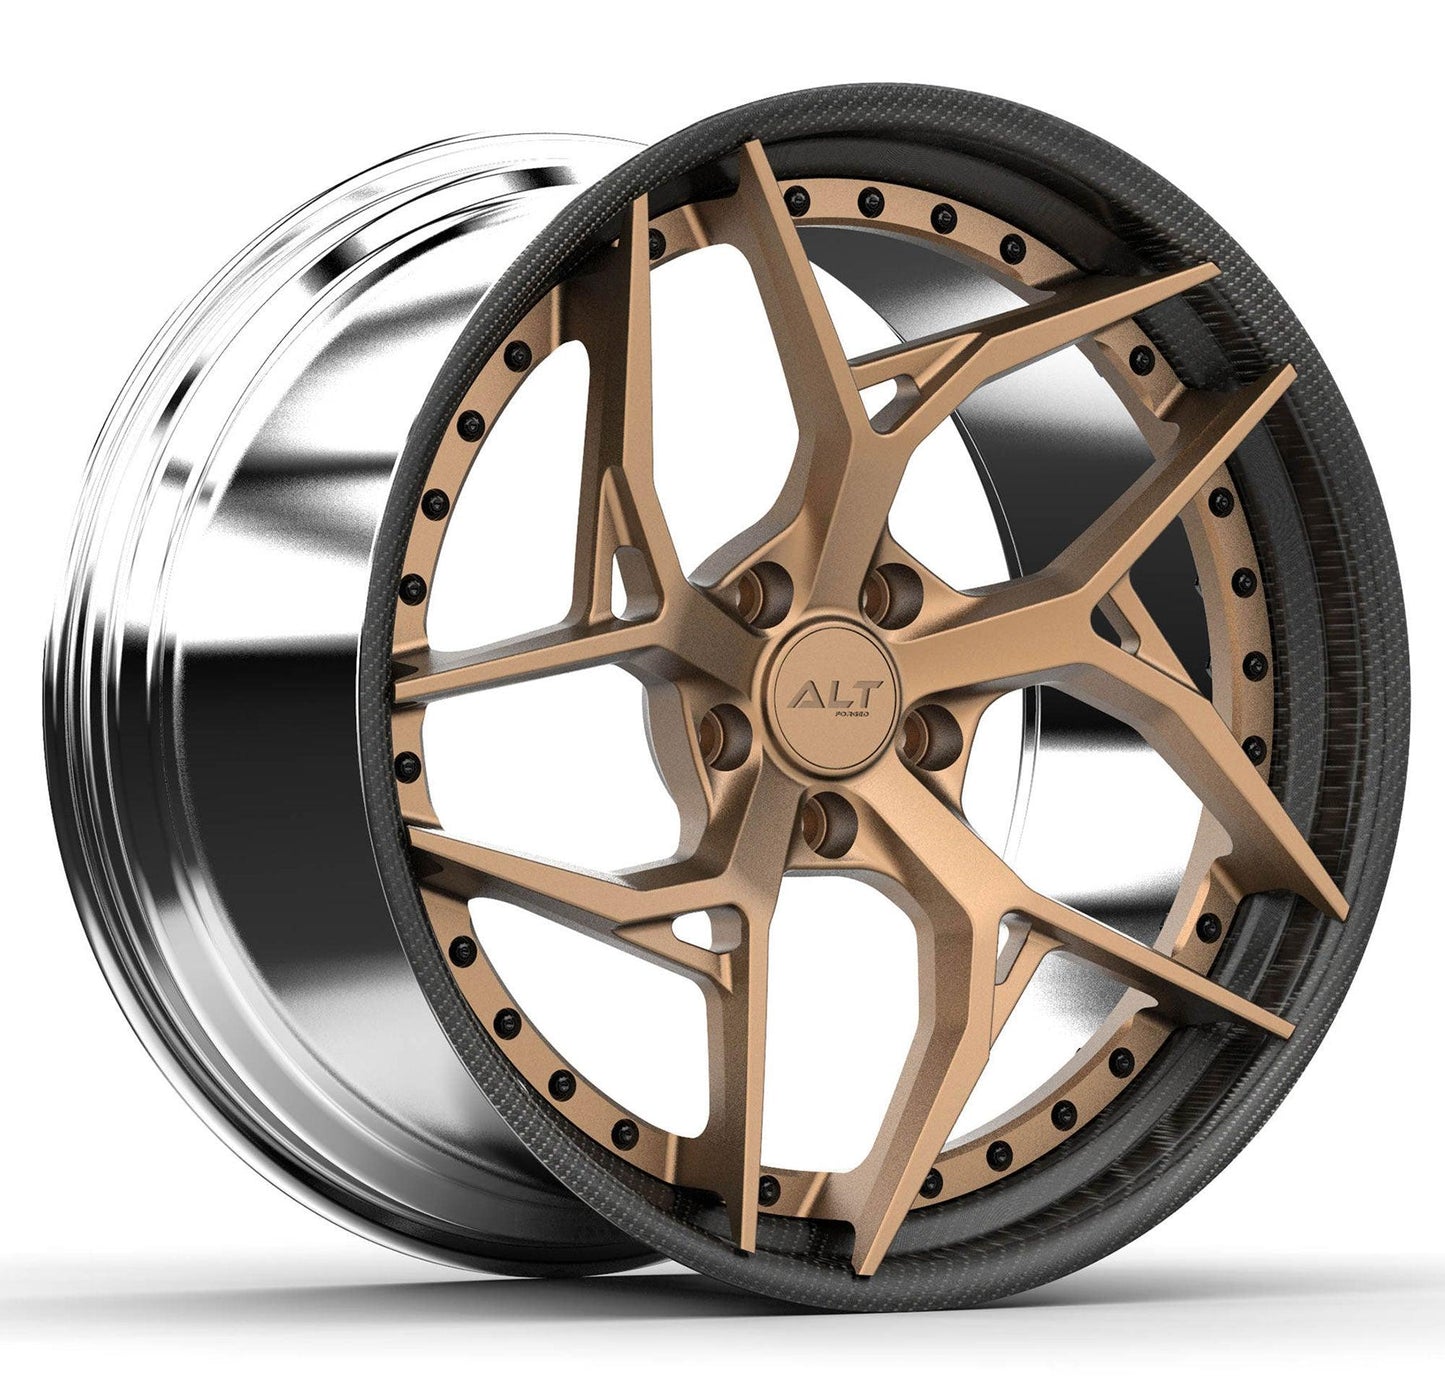 DL12 2-Piece Forged wheels 20x9 / 21x12 for C8 Corvette Z51